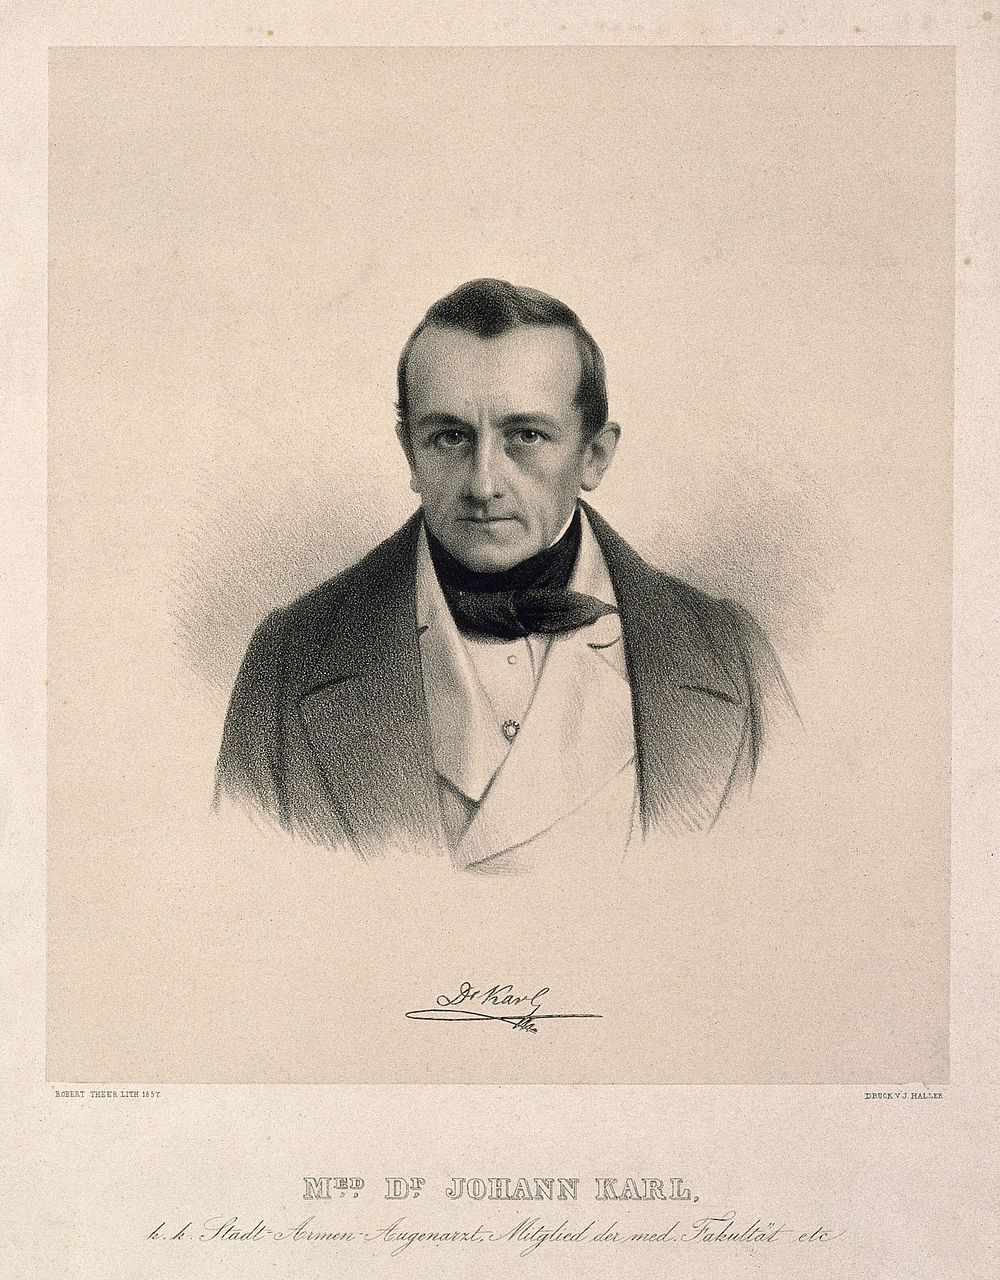 Johann Karl. Lithograph by R. Theer, 1857.